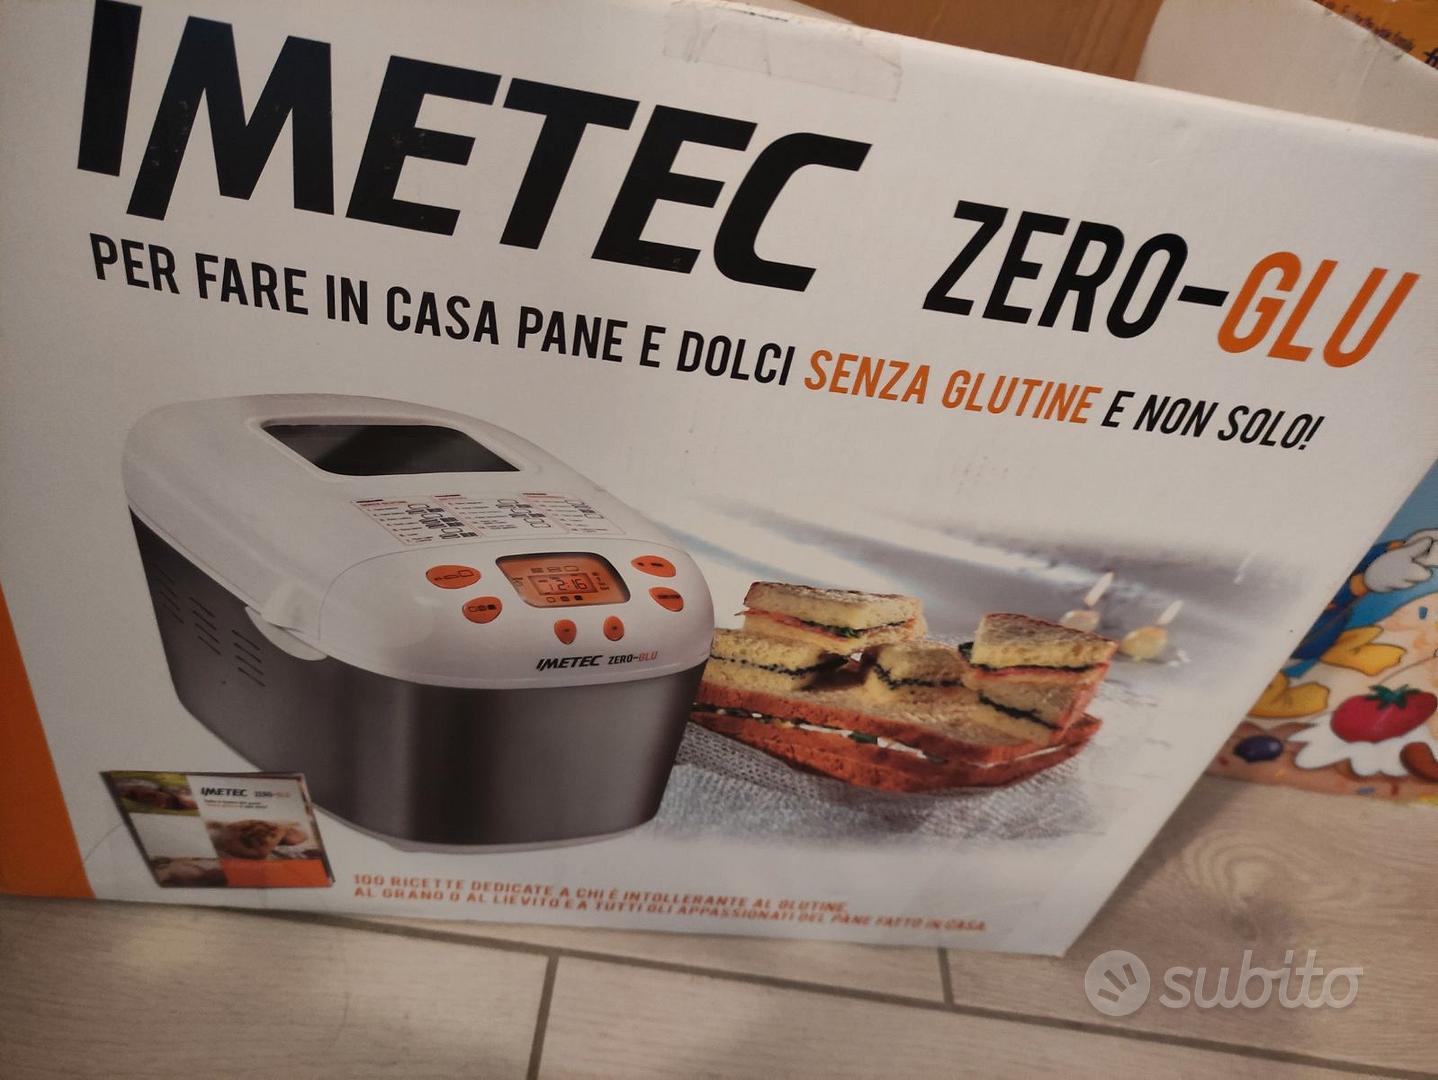 Imetec zero glu - Elettrodomestici In vendita a Cuneo